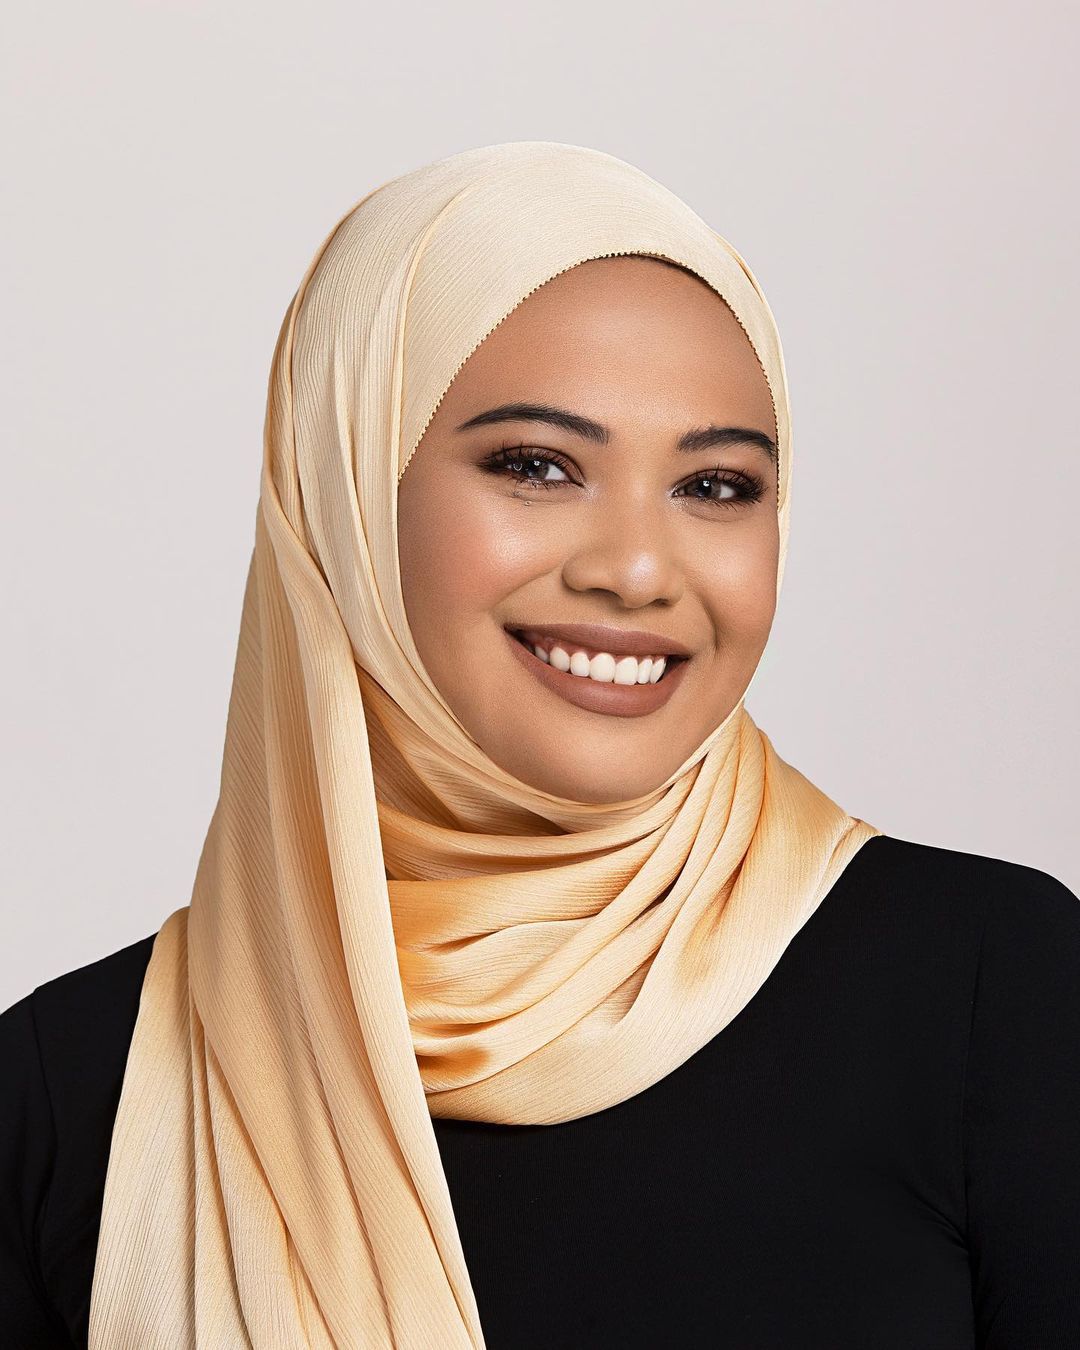 Warna Jilbab Lebaran Untuk Kulit Sawo Matang - Silk Gold Sunset